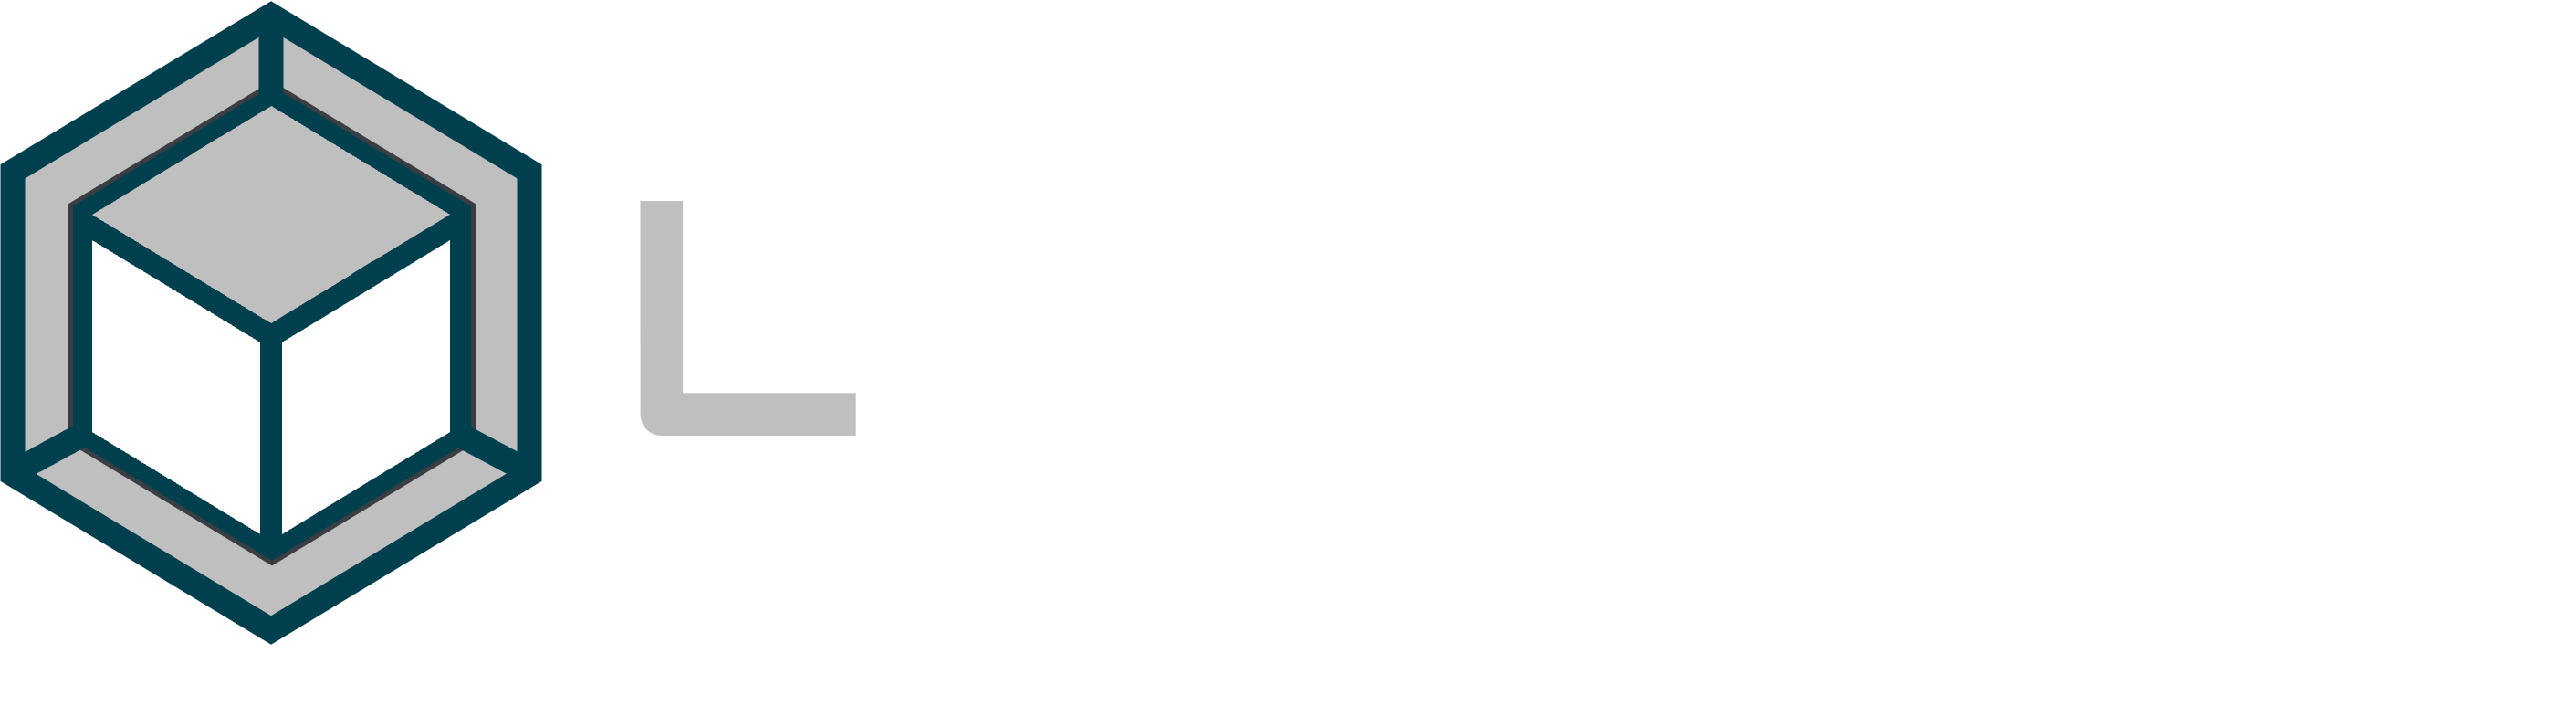 Lokistix GmbH - The revolution of battery transport